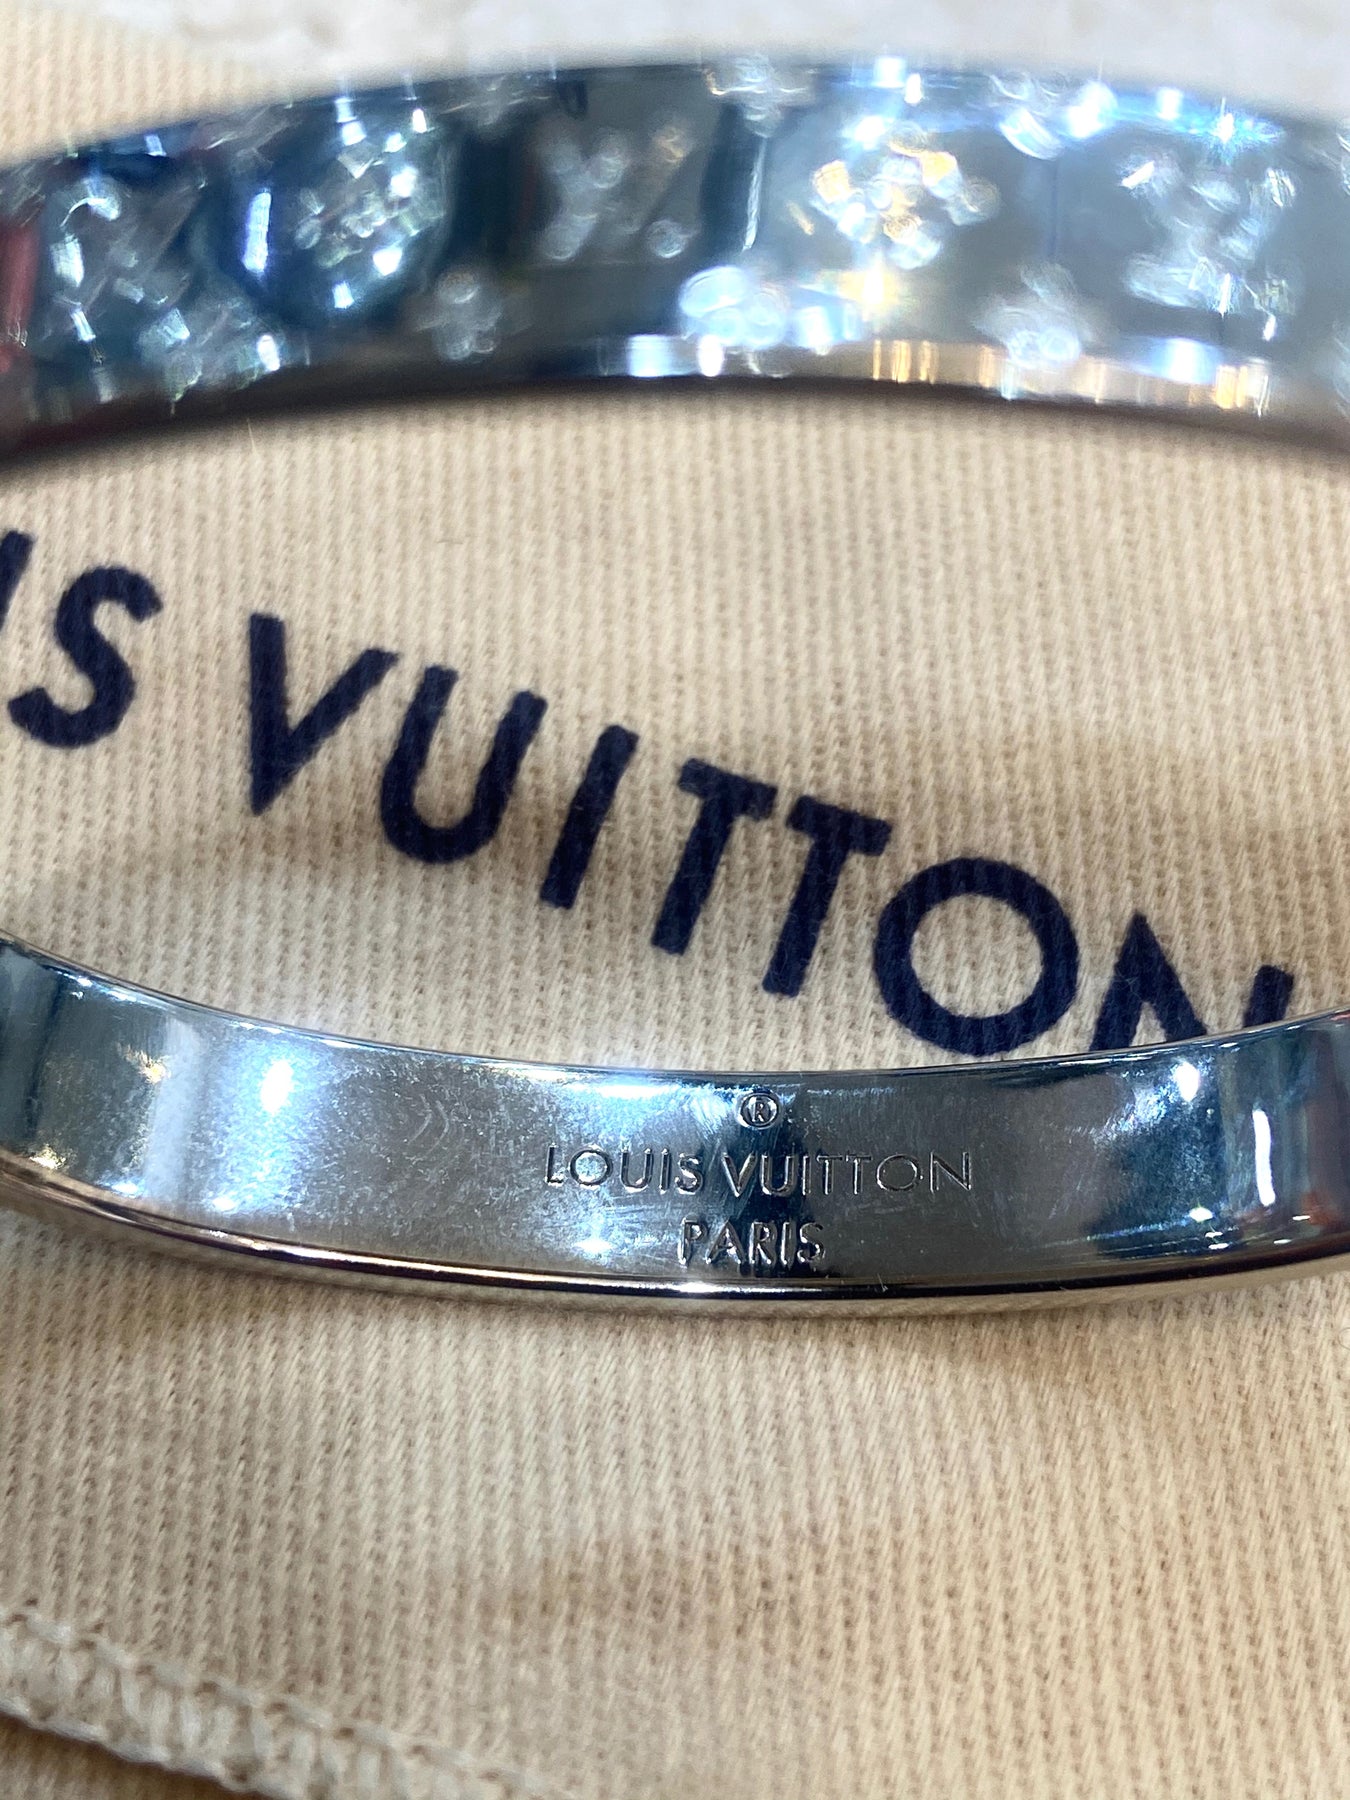 Louis Vuitton Palladium Finish Nanogram Cuff Bracelet S Louis